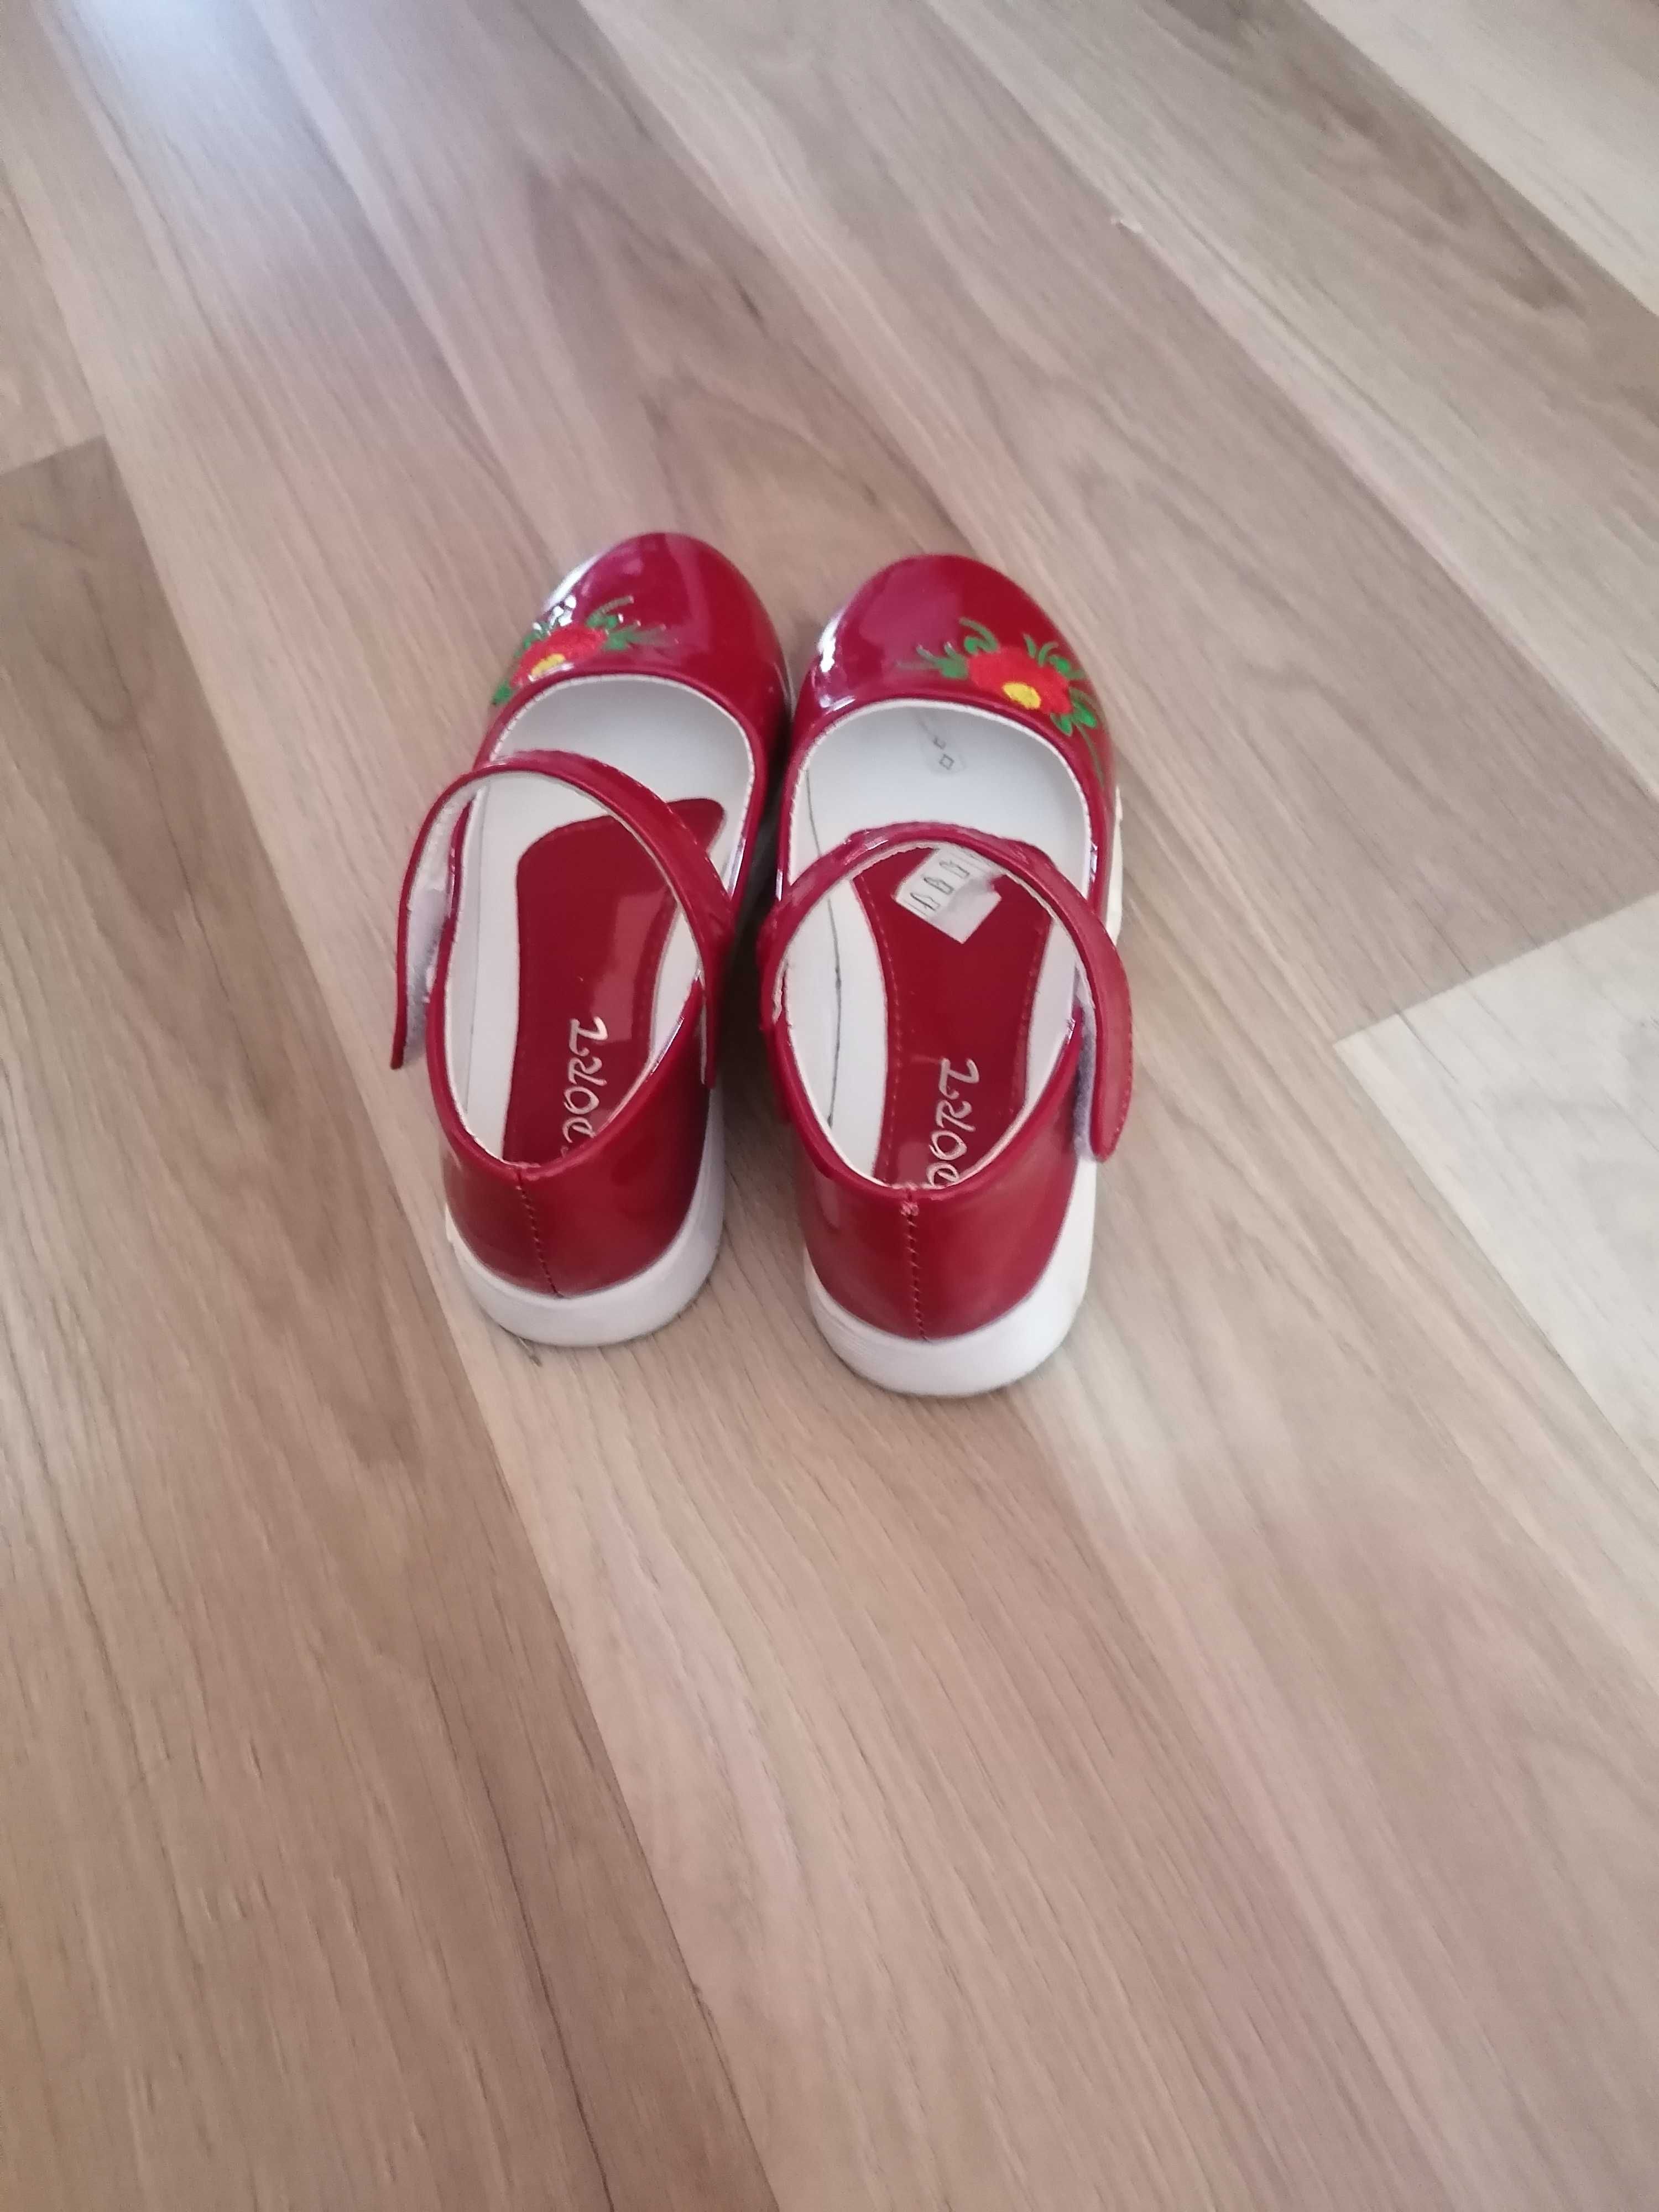 Pantofi rosii de lac fetite marime 30